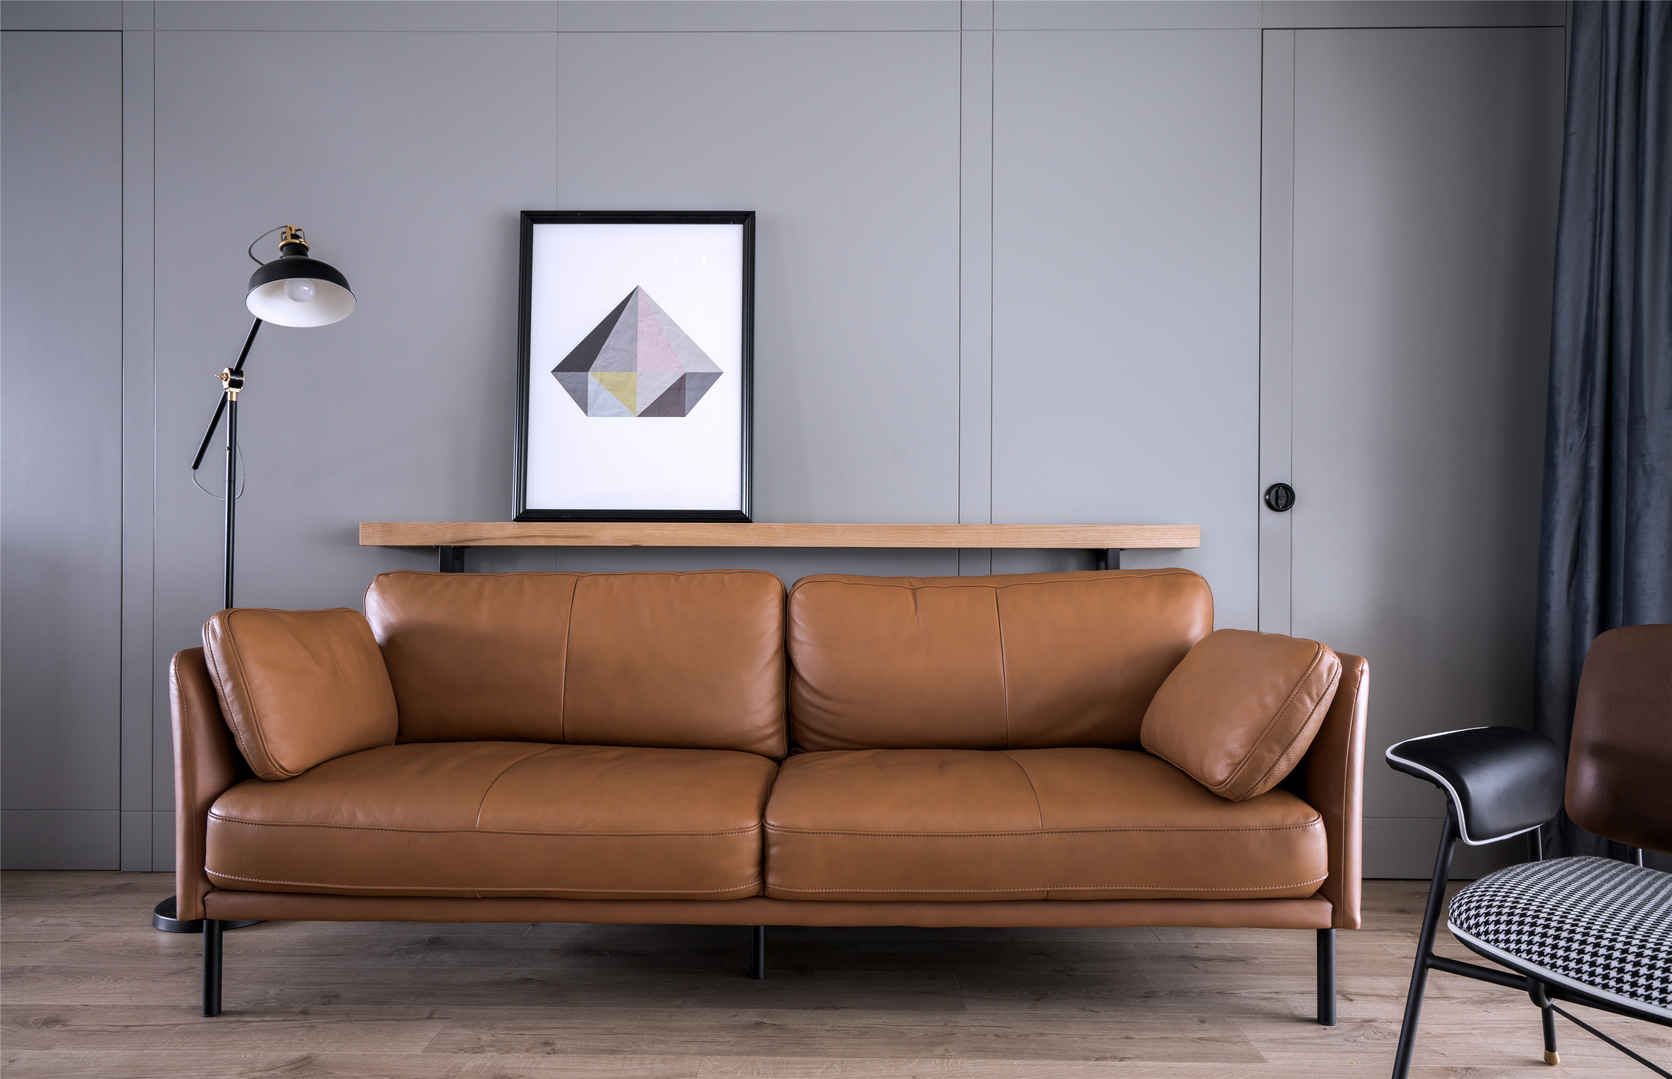 110m²现代简约装修效果图沙发背景墙